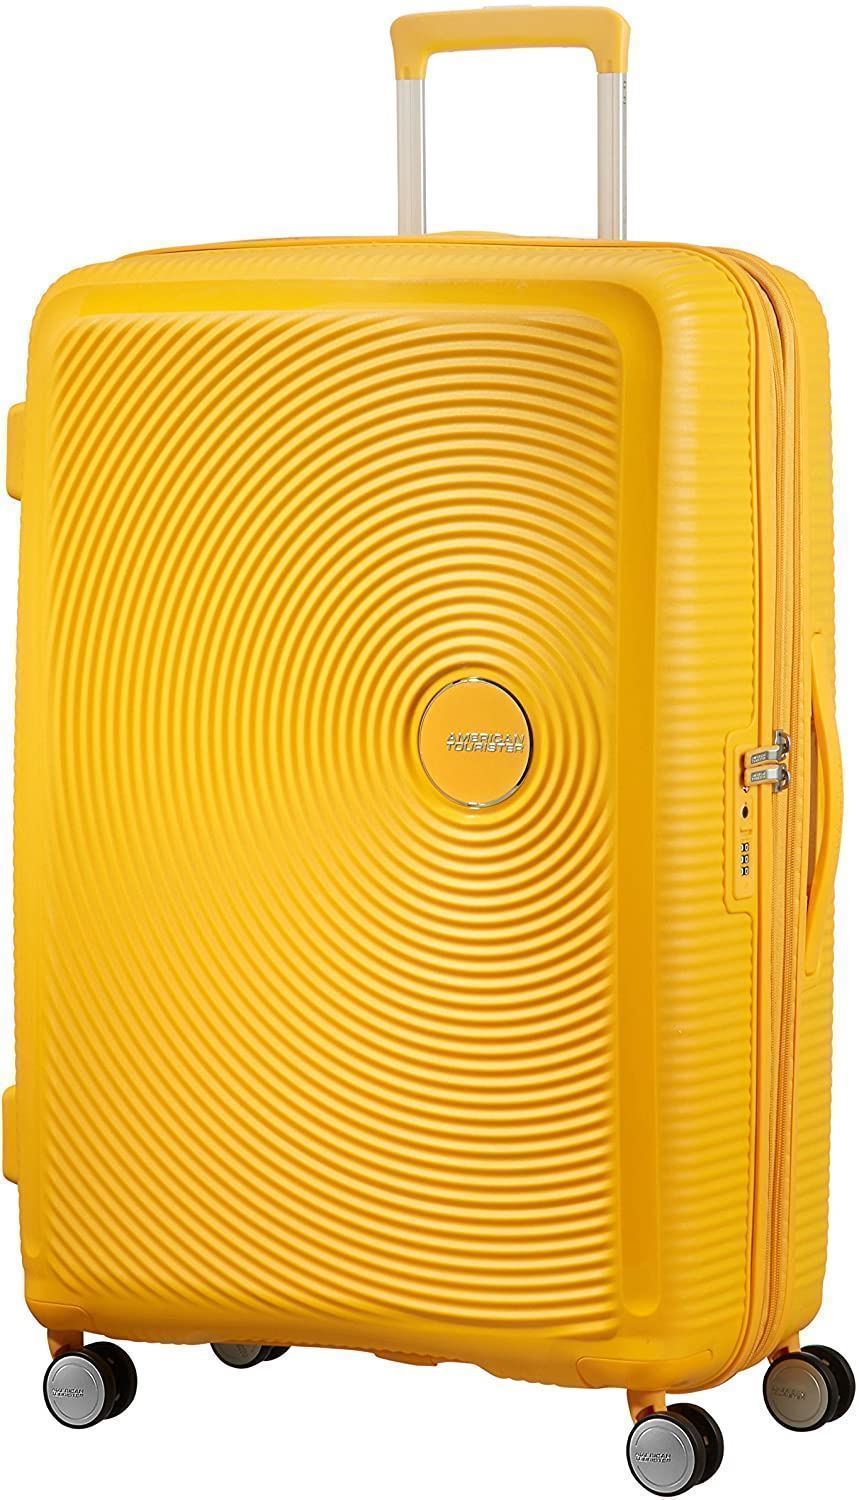 American Tourister Soundbox rigida grande expandible amarilla - Imagen 2